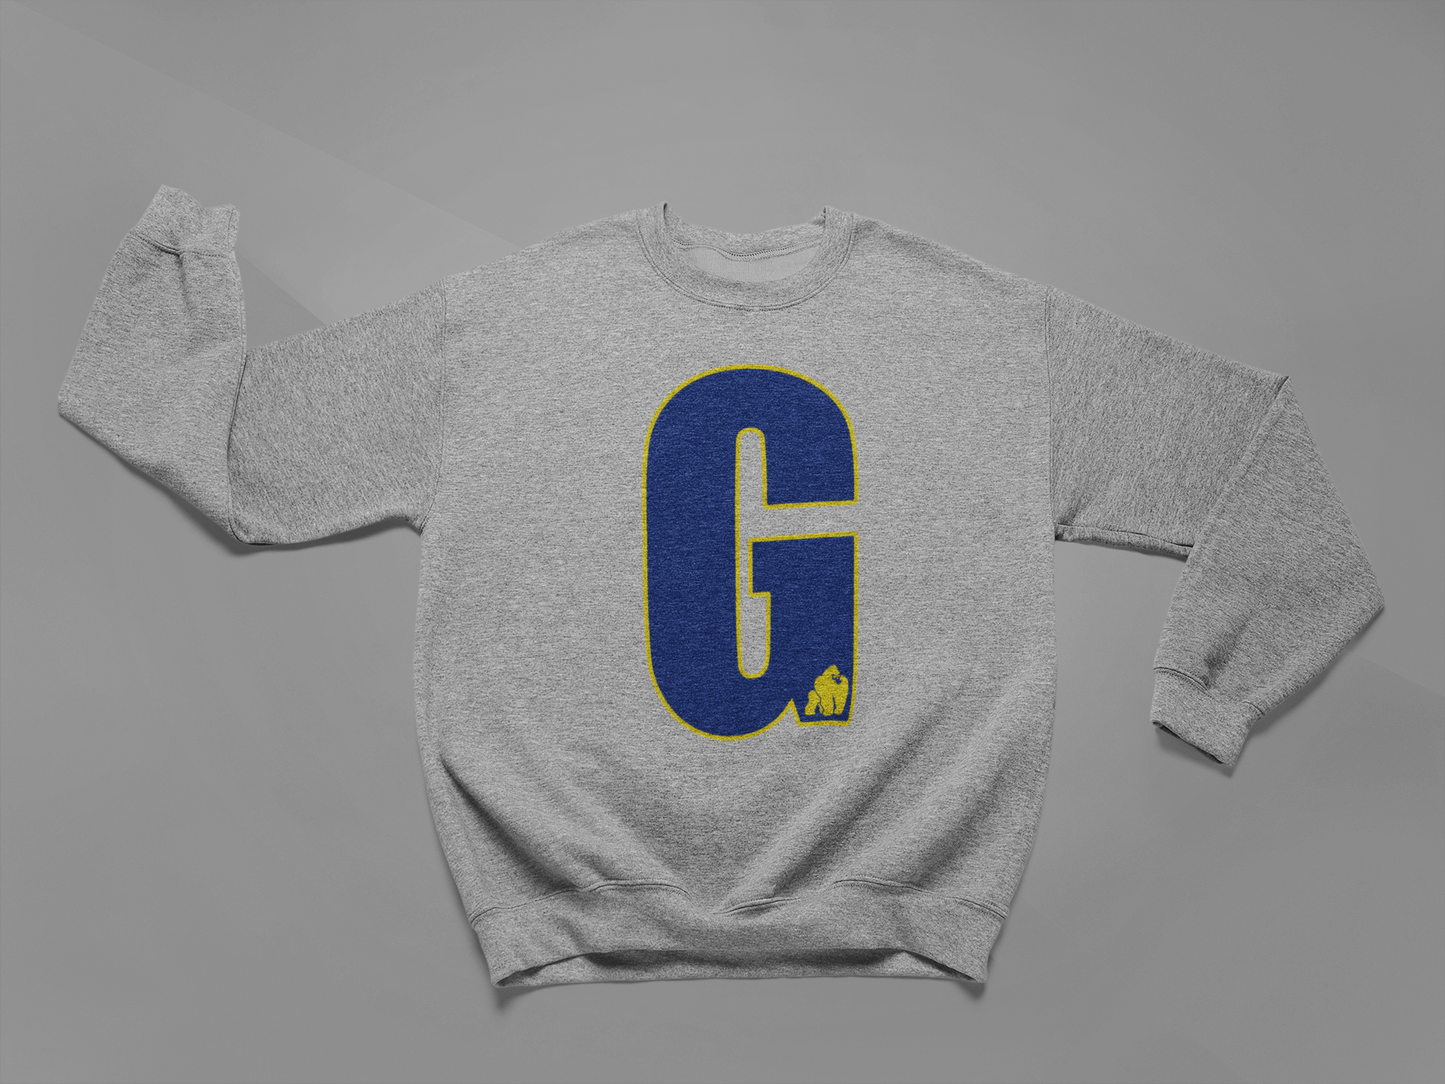 BIG G Crewneck Sweatshirt